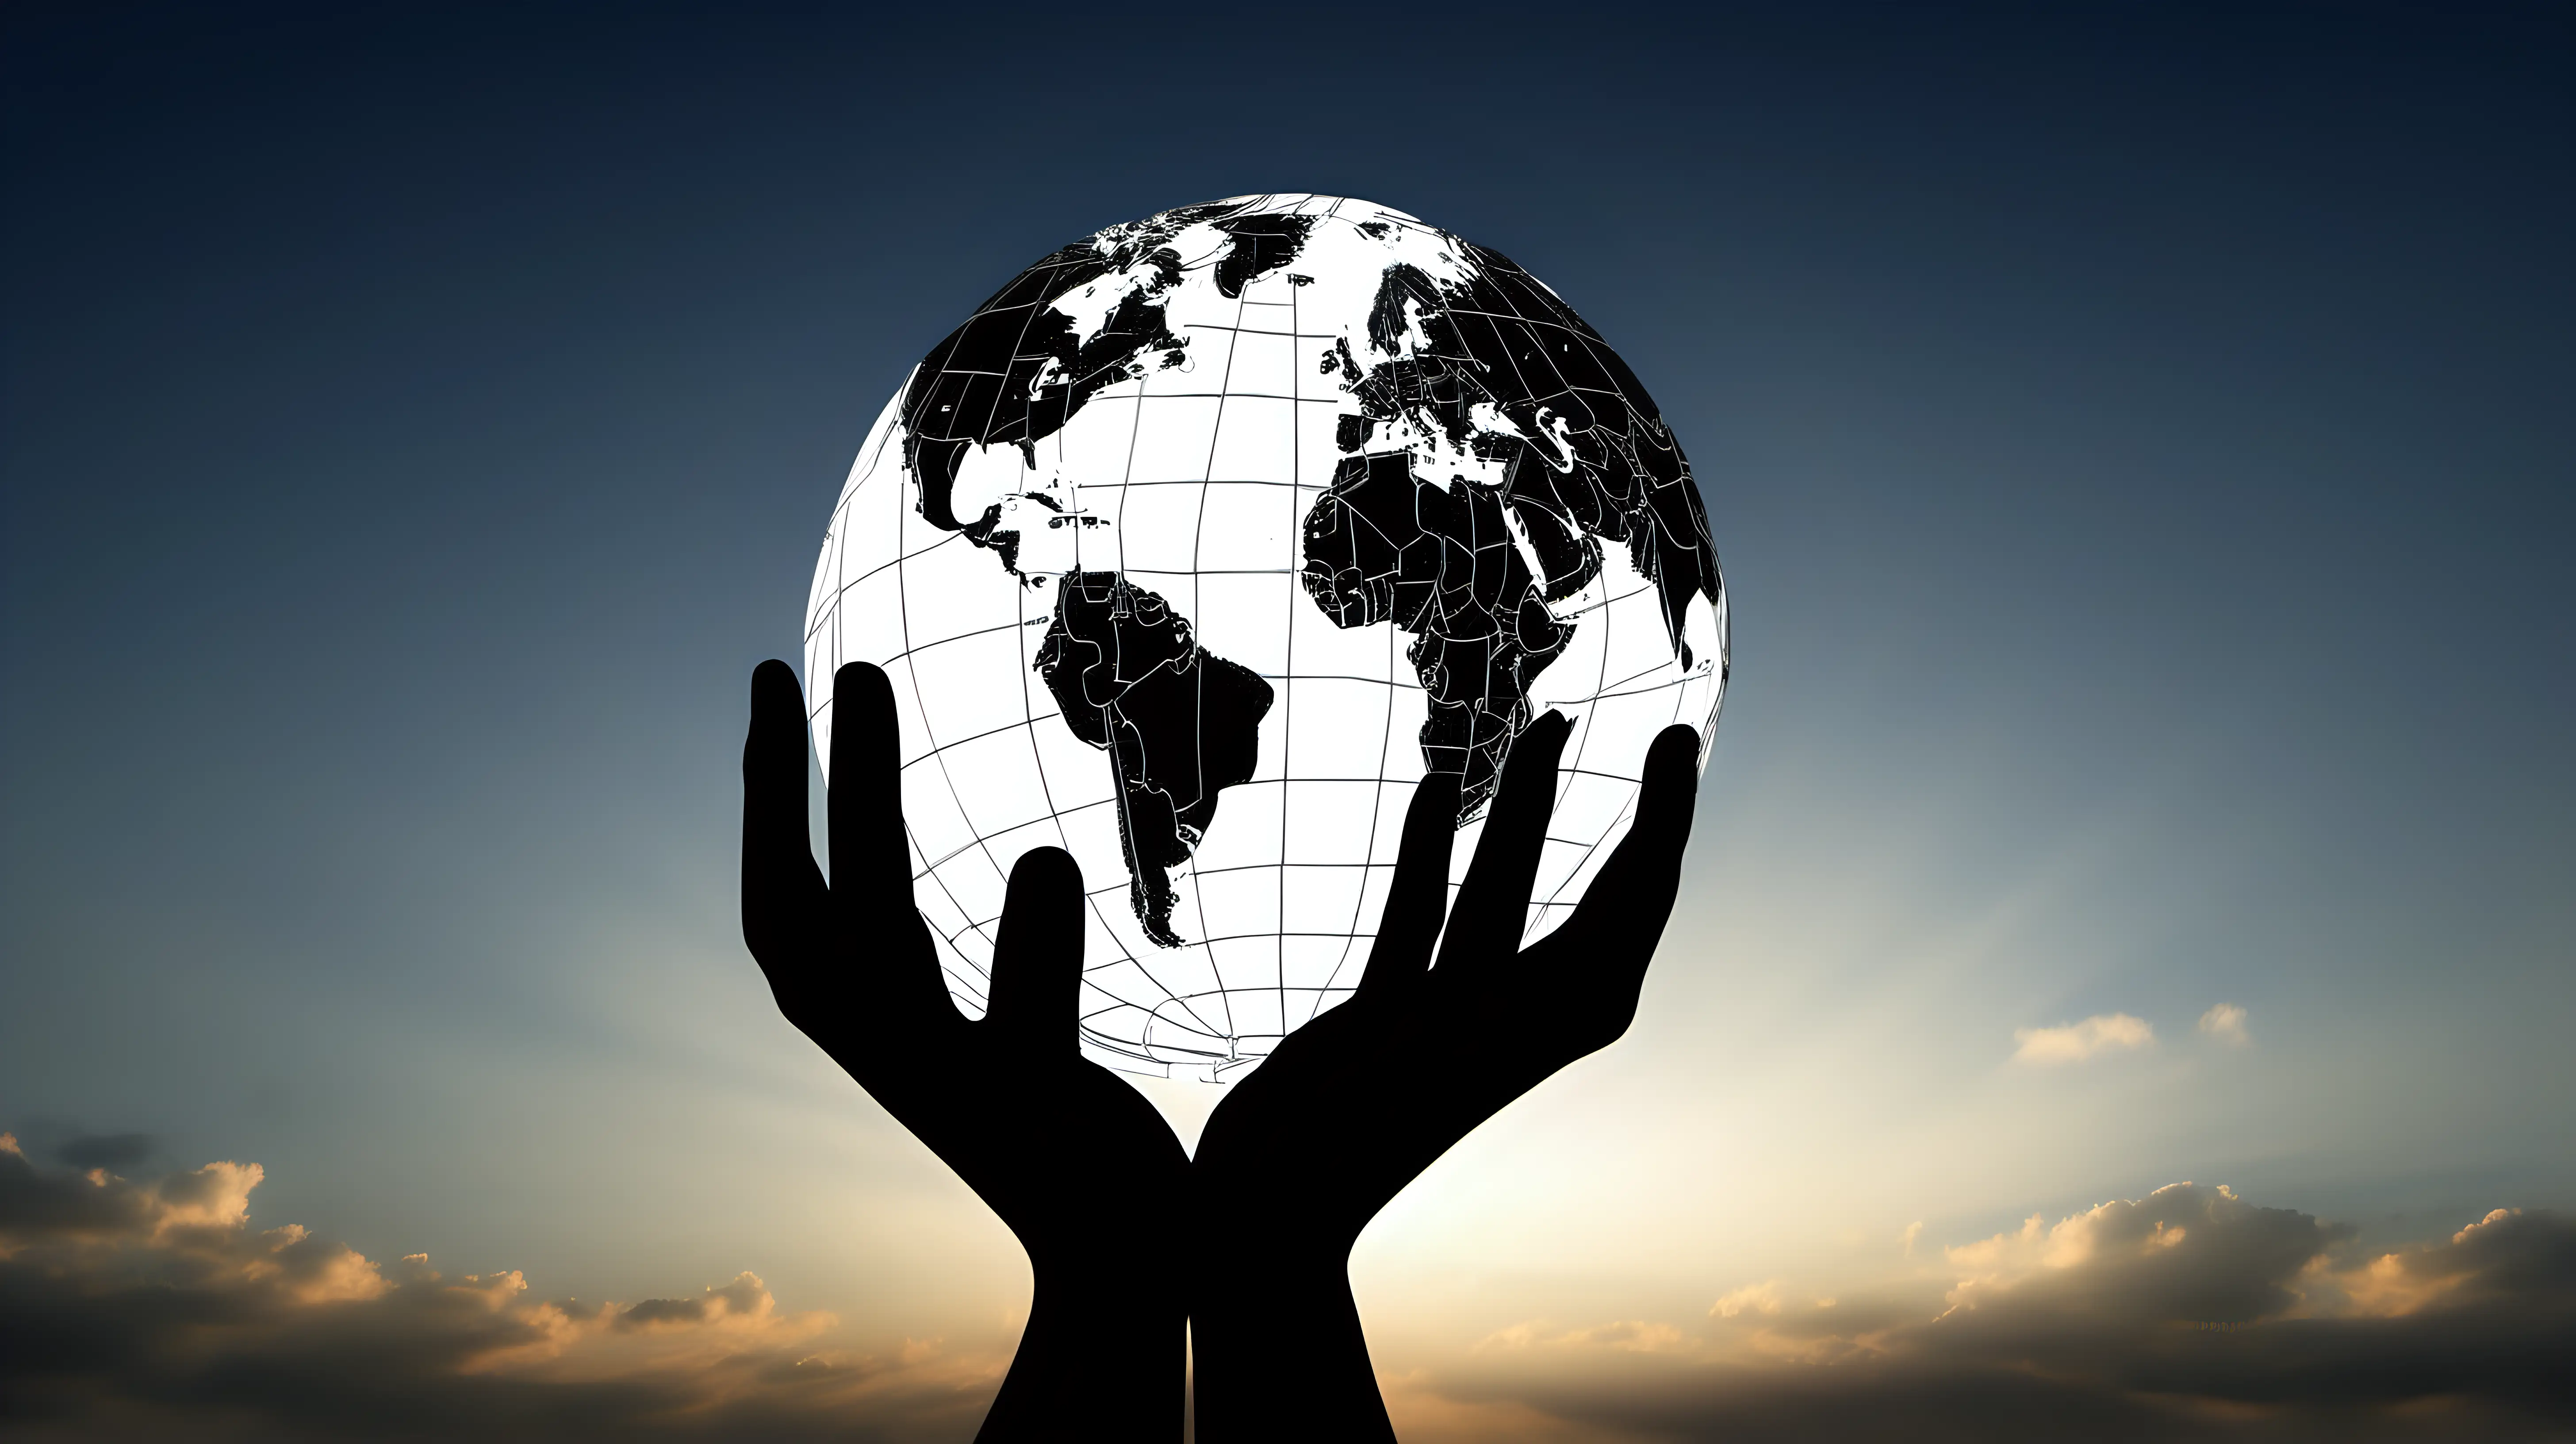 Hands Releasing World Sphere Symbolic Global Aspirations